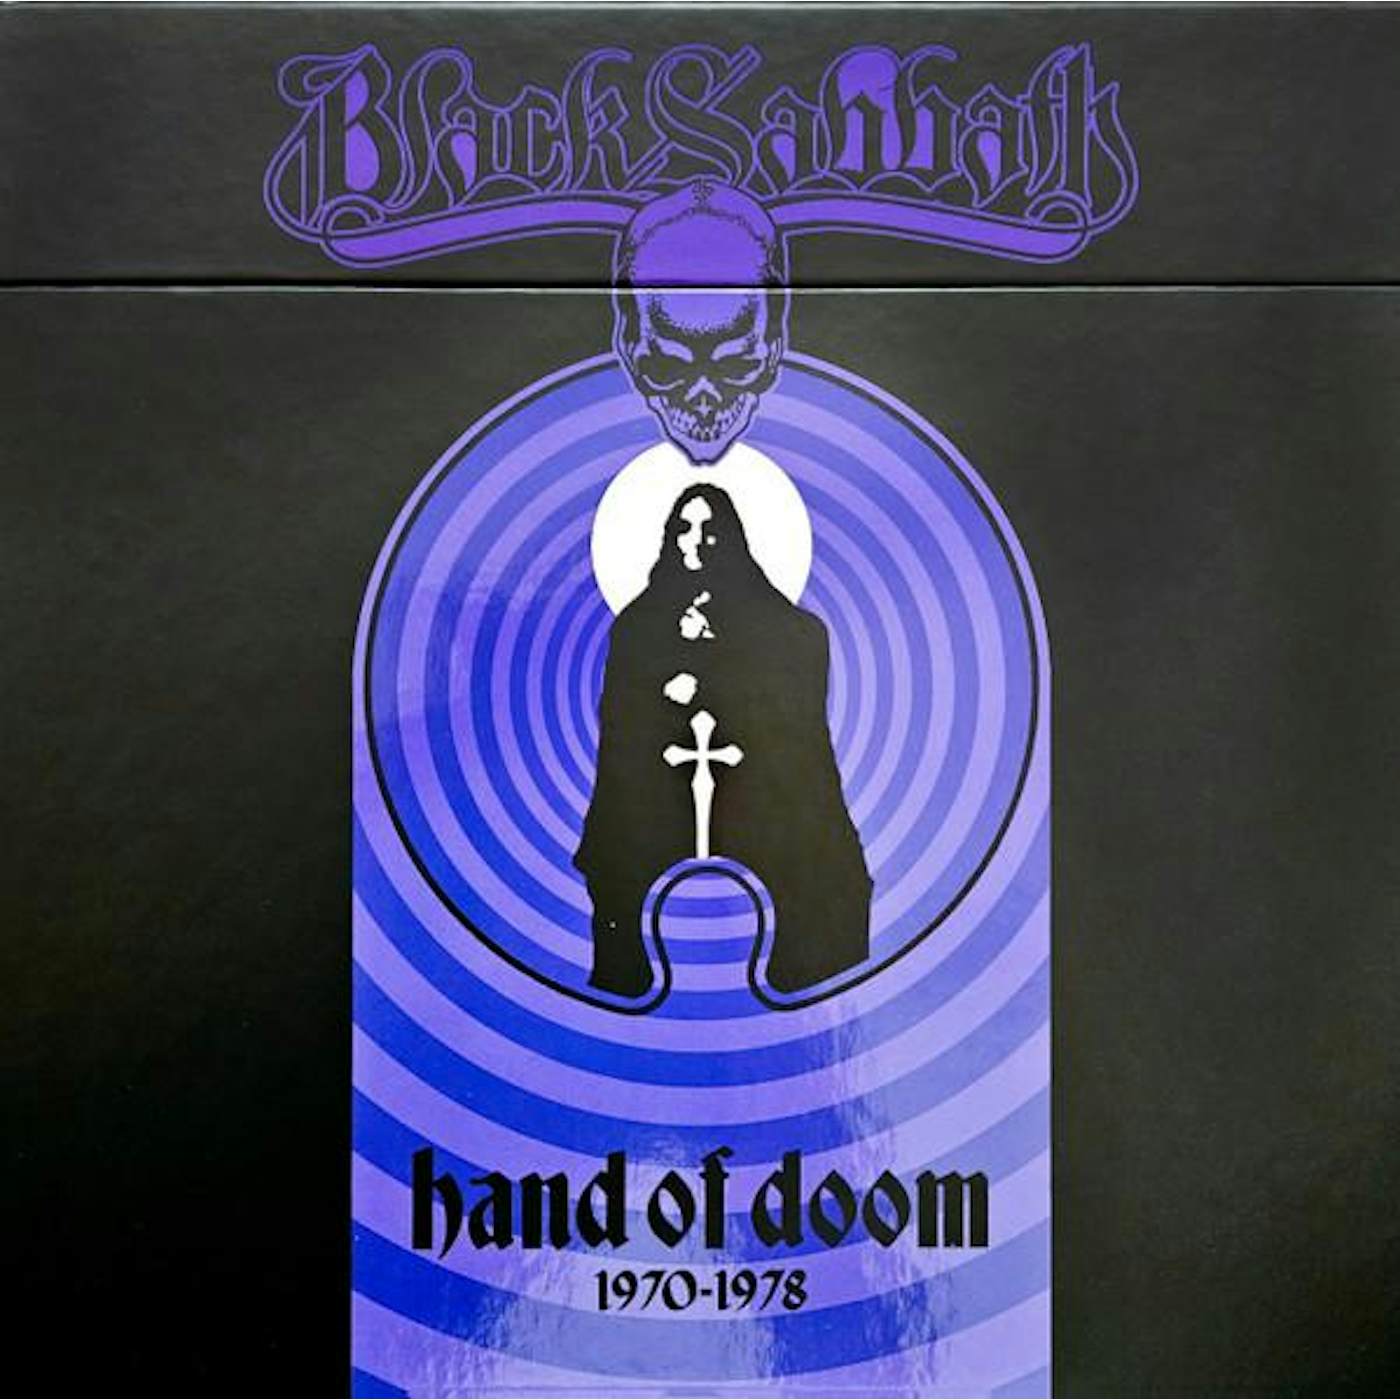 Black Sabbath Hand Of Doom 1970-1978 (Picture Disc Collection) Vinyl Record